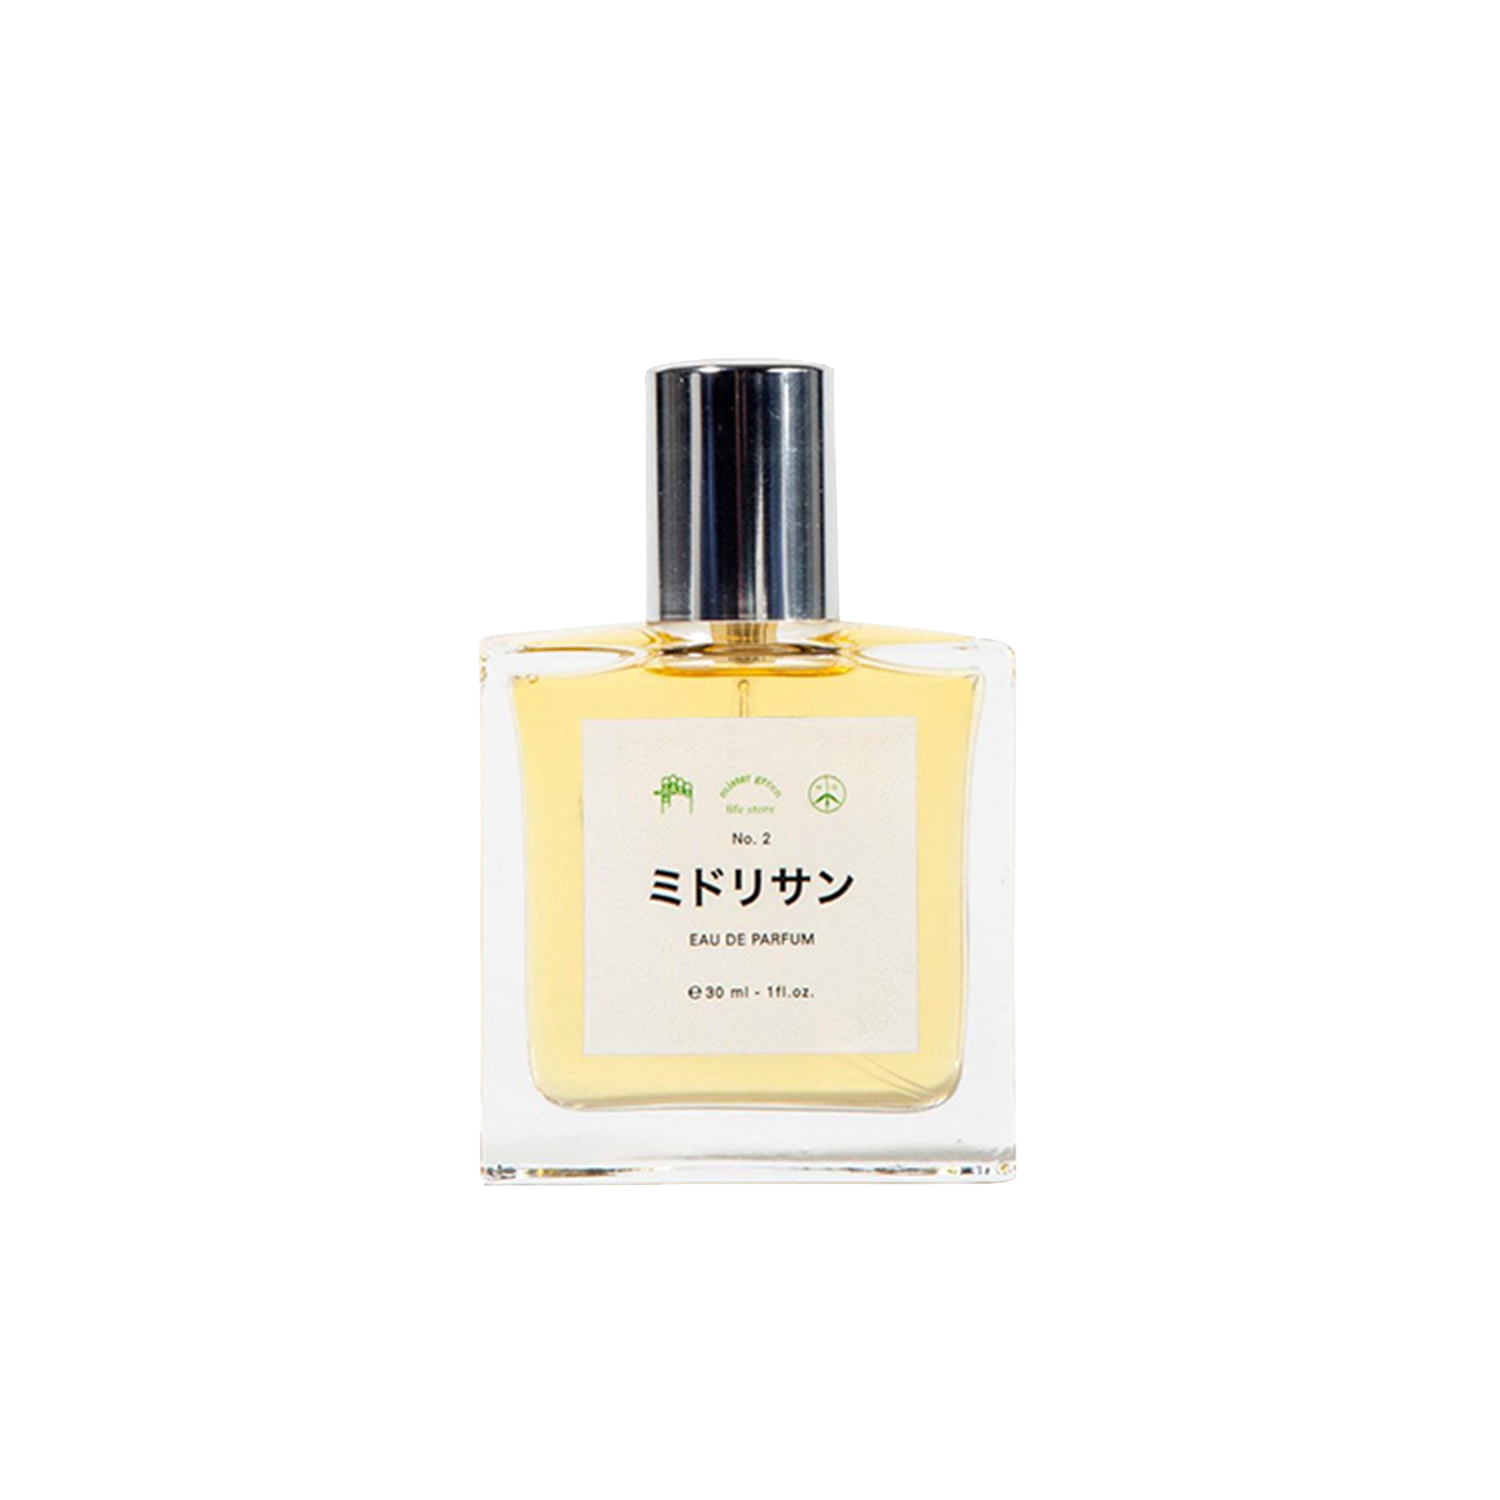 Fragrance No. 2 - ミドリサン (Midori San) - 30ml